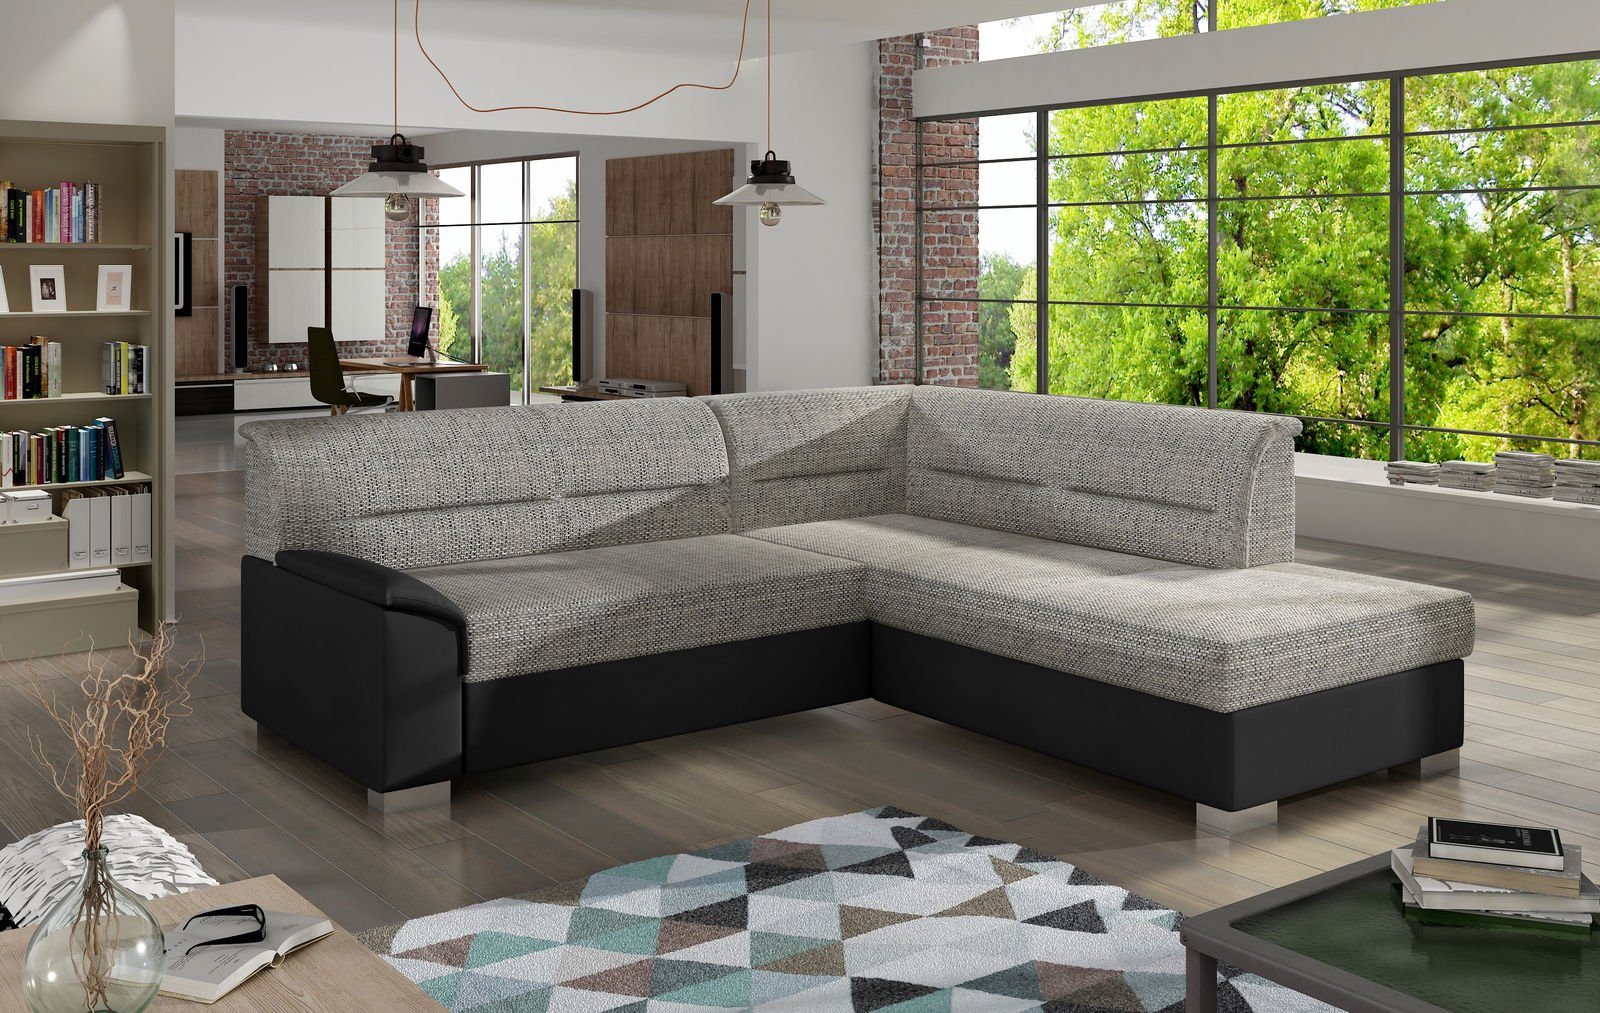 JVmoebel Ecksofa Design Ecksofa Schlafsofa Bettfunktion Couch Leder Textil Polster, Mit Bettfunktion Hellgrau / Schwarz